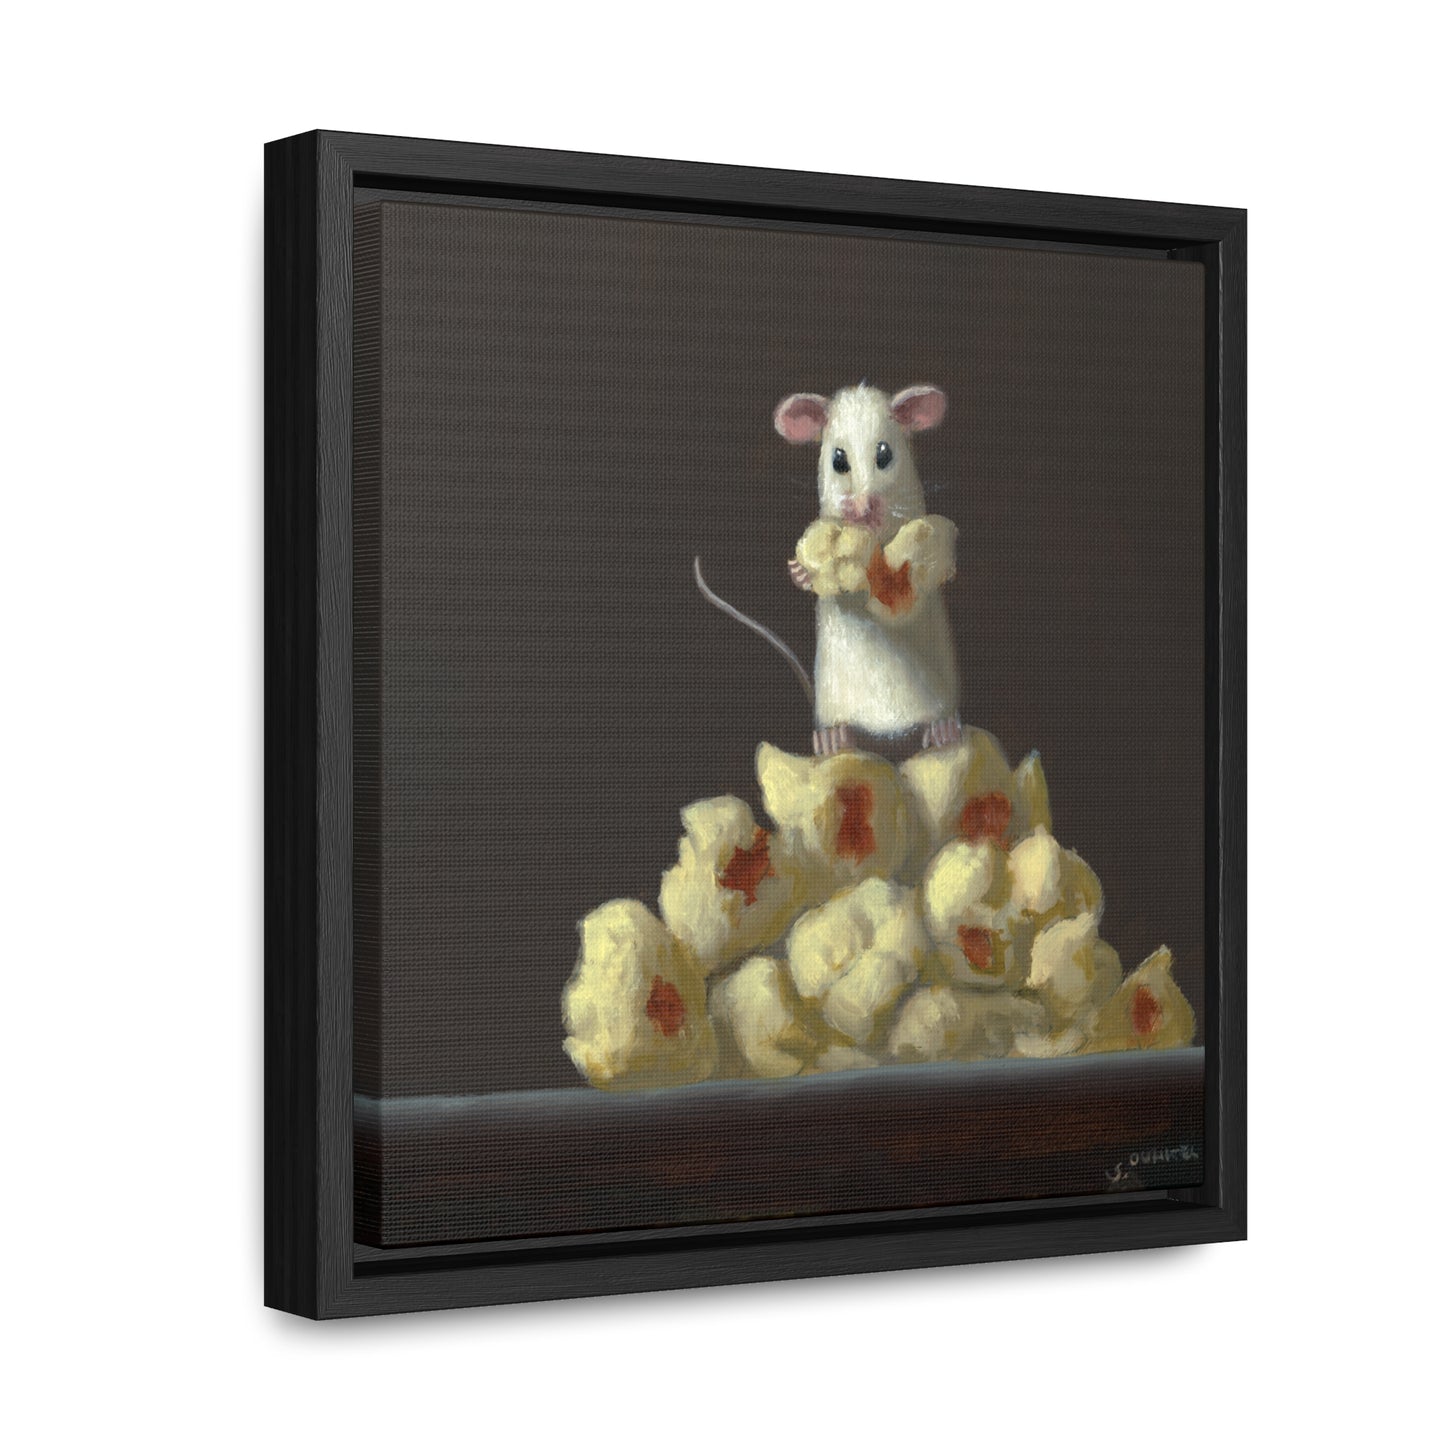 Stuart Dunkel: "More Butter" - Framed Canvas Reproduction